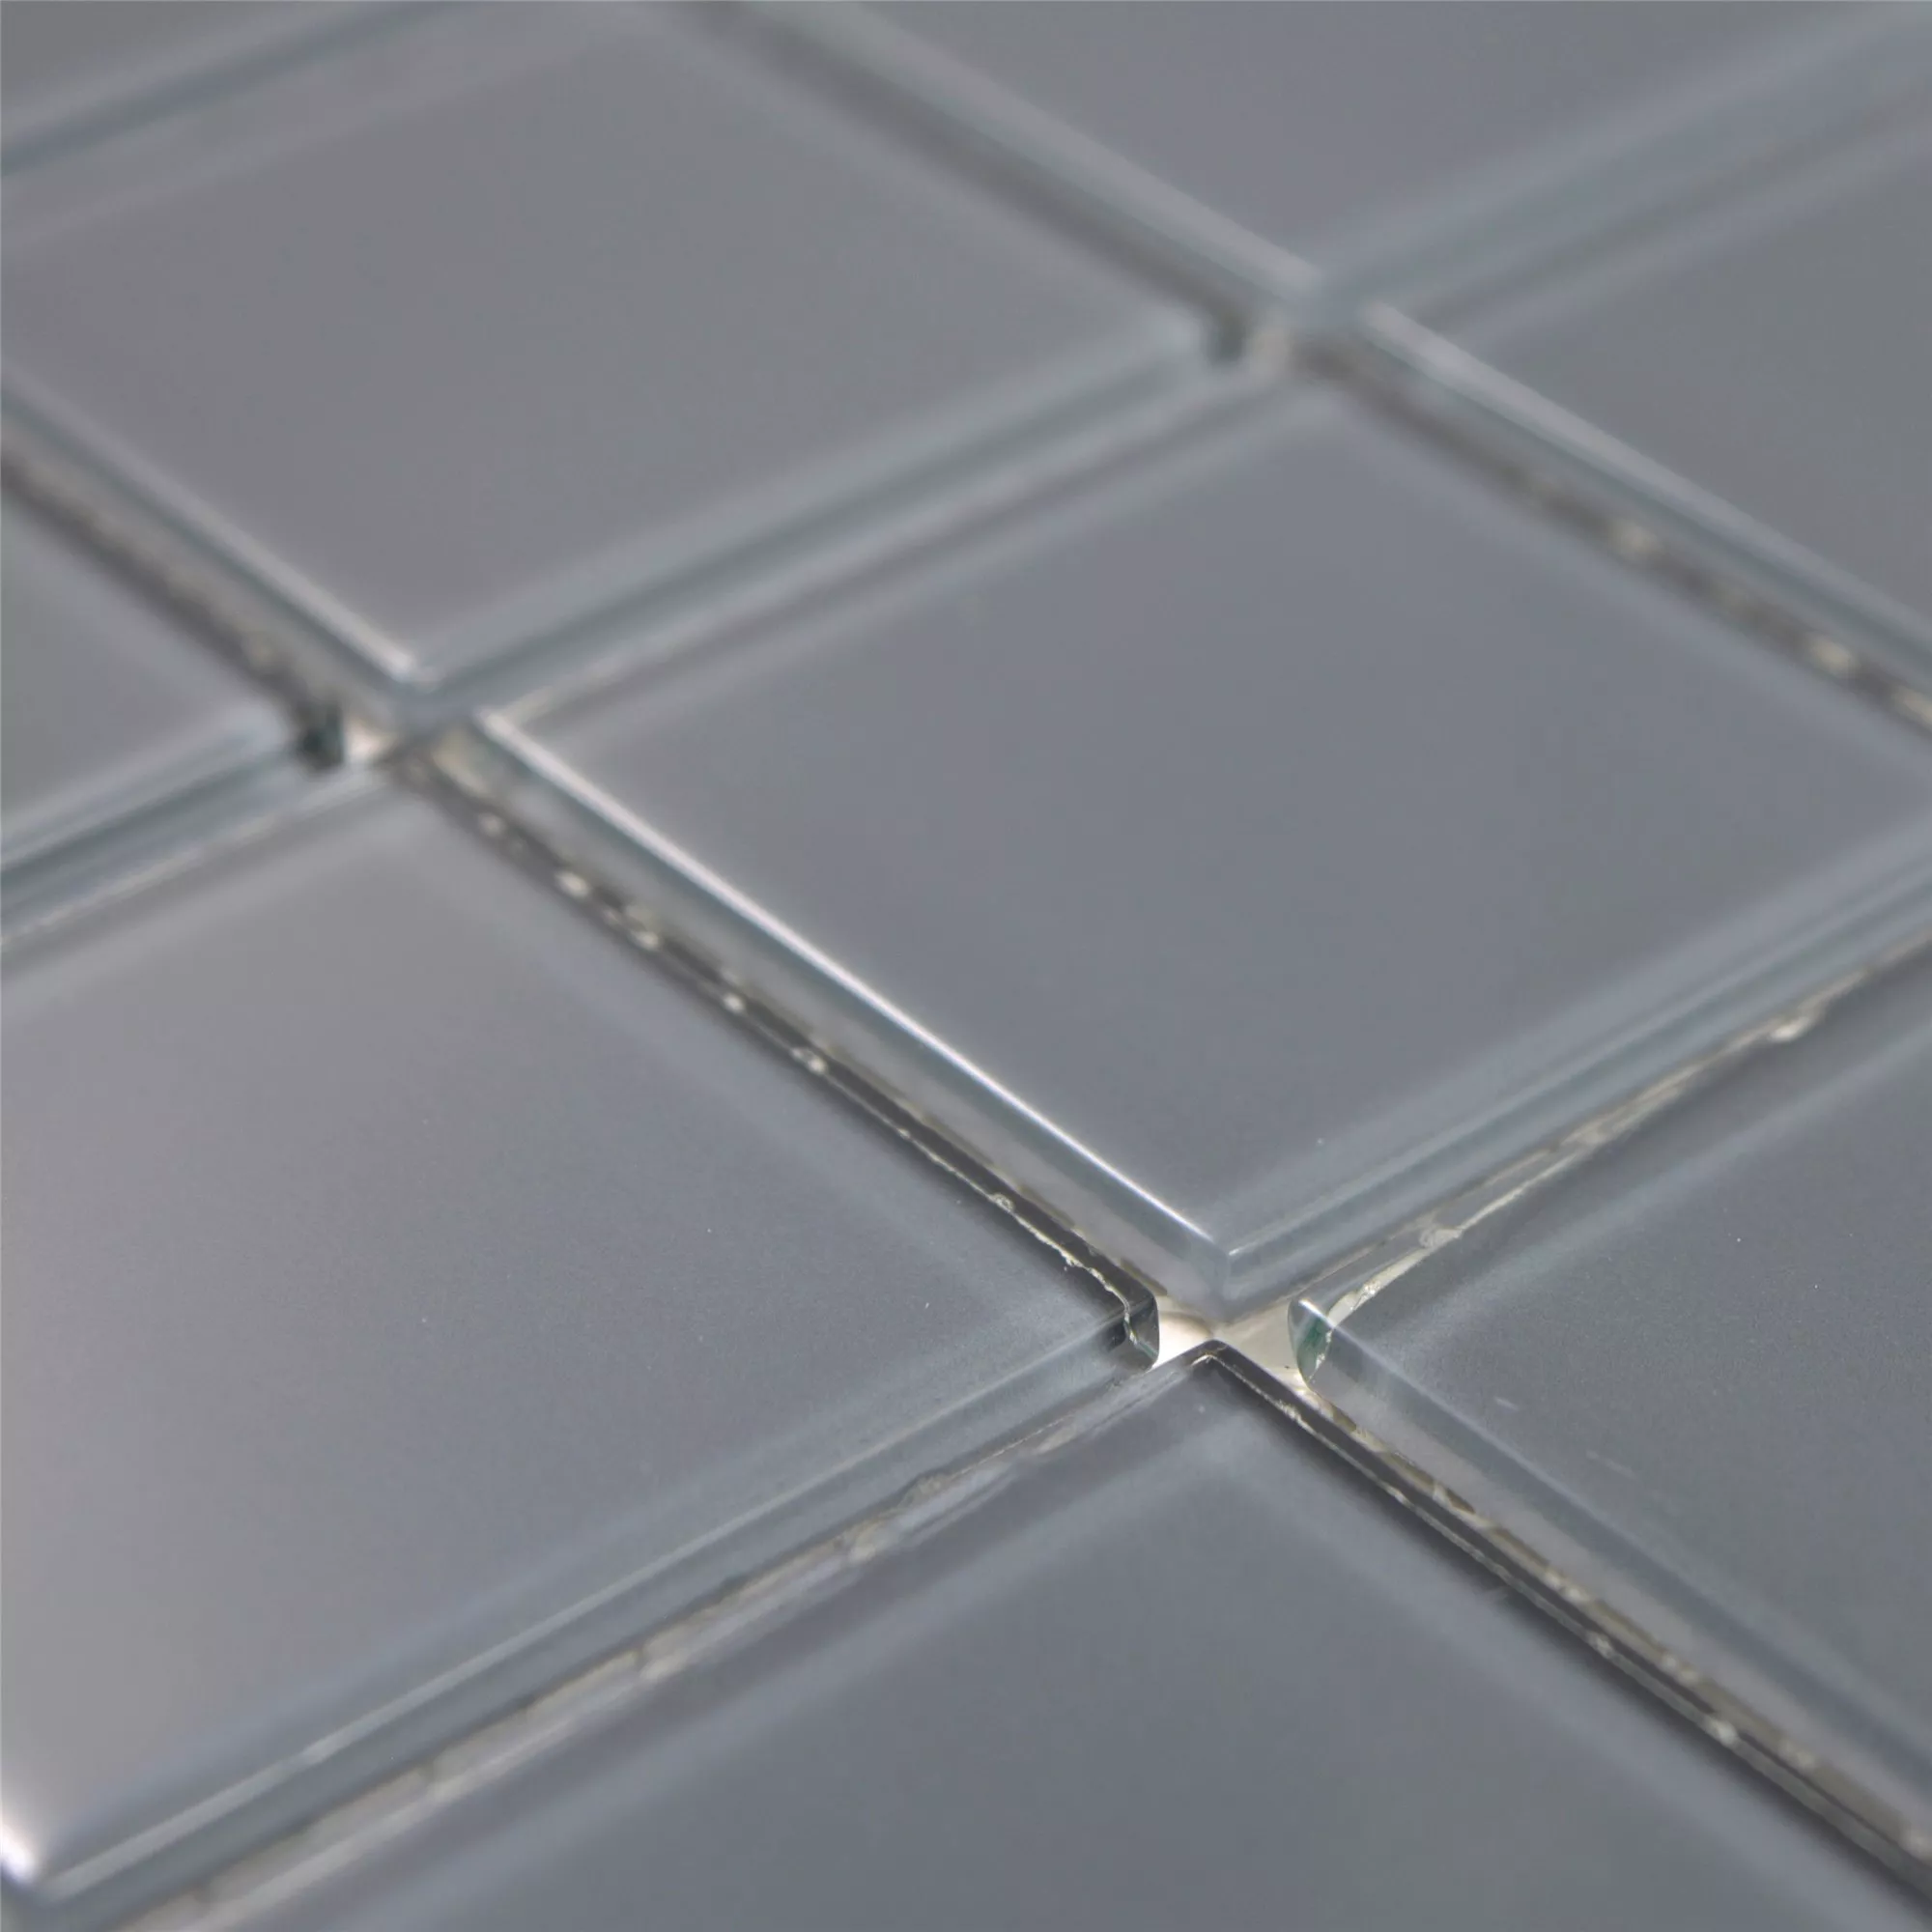 Glass Mosaic Tiles Brahma Grey Uni